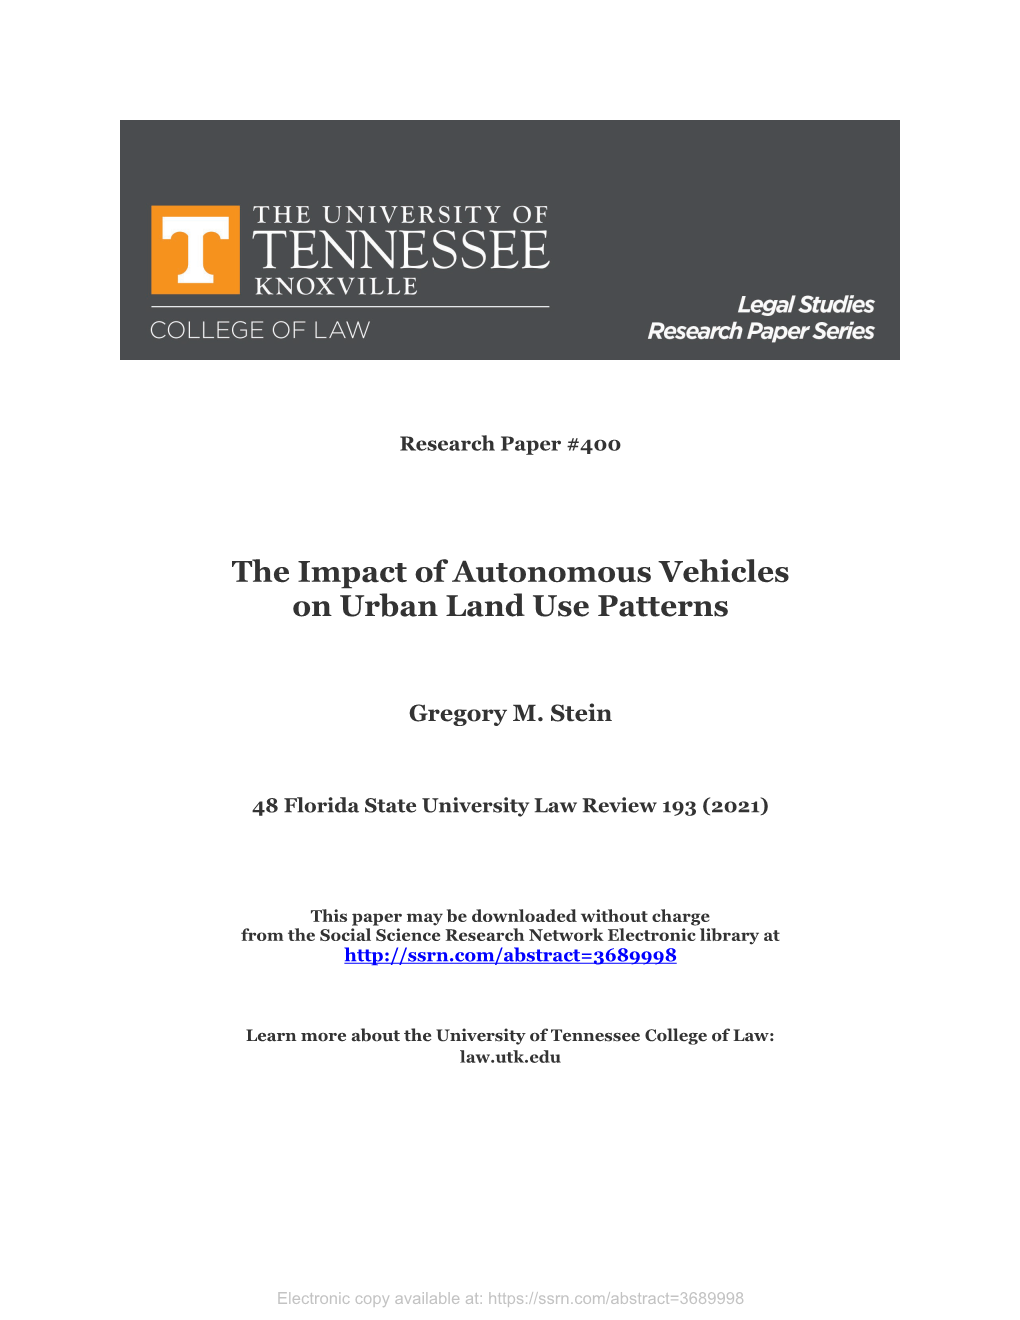 The Impact of Autonomous Vehicles on Urban Land Use Patterns